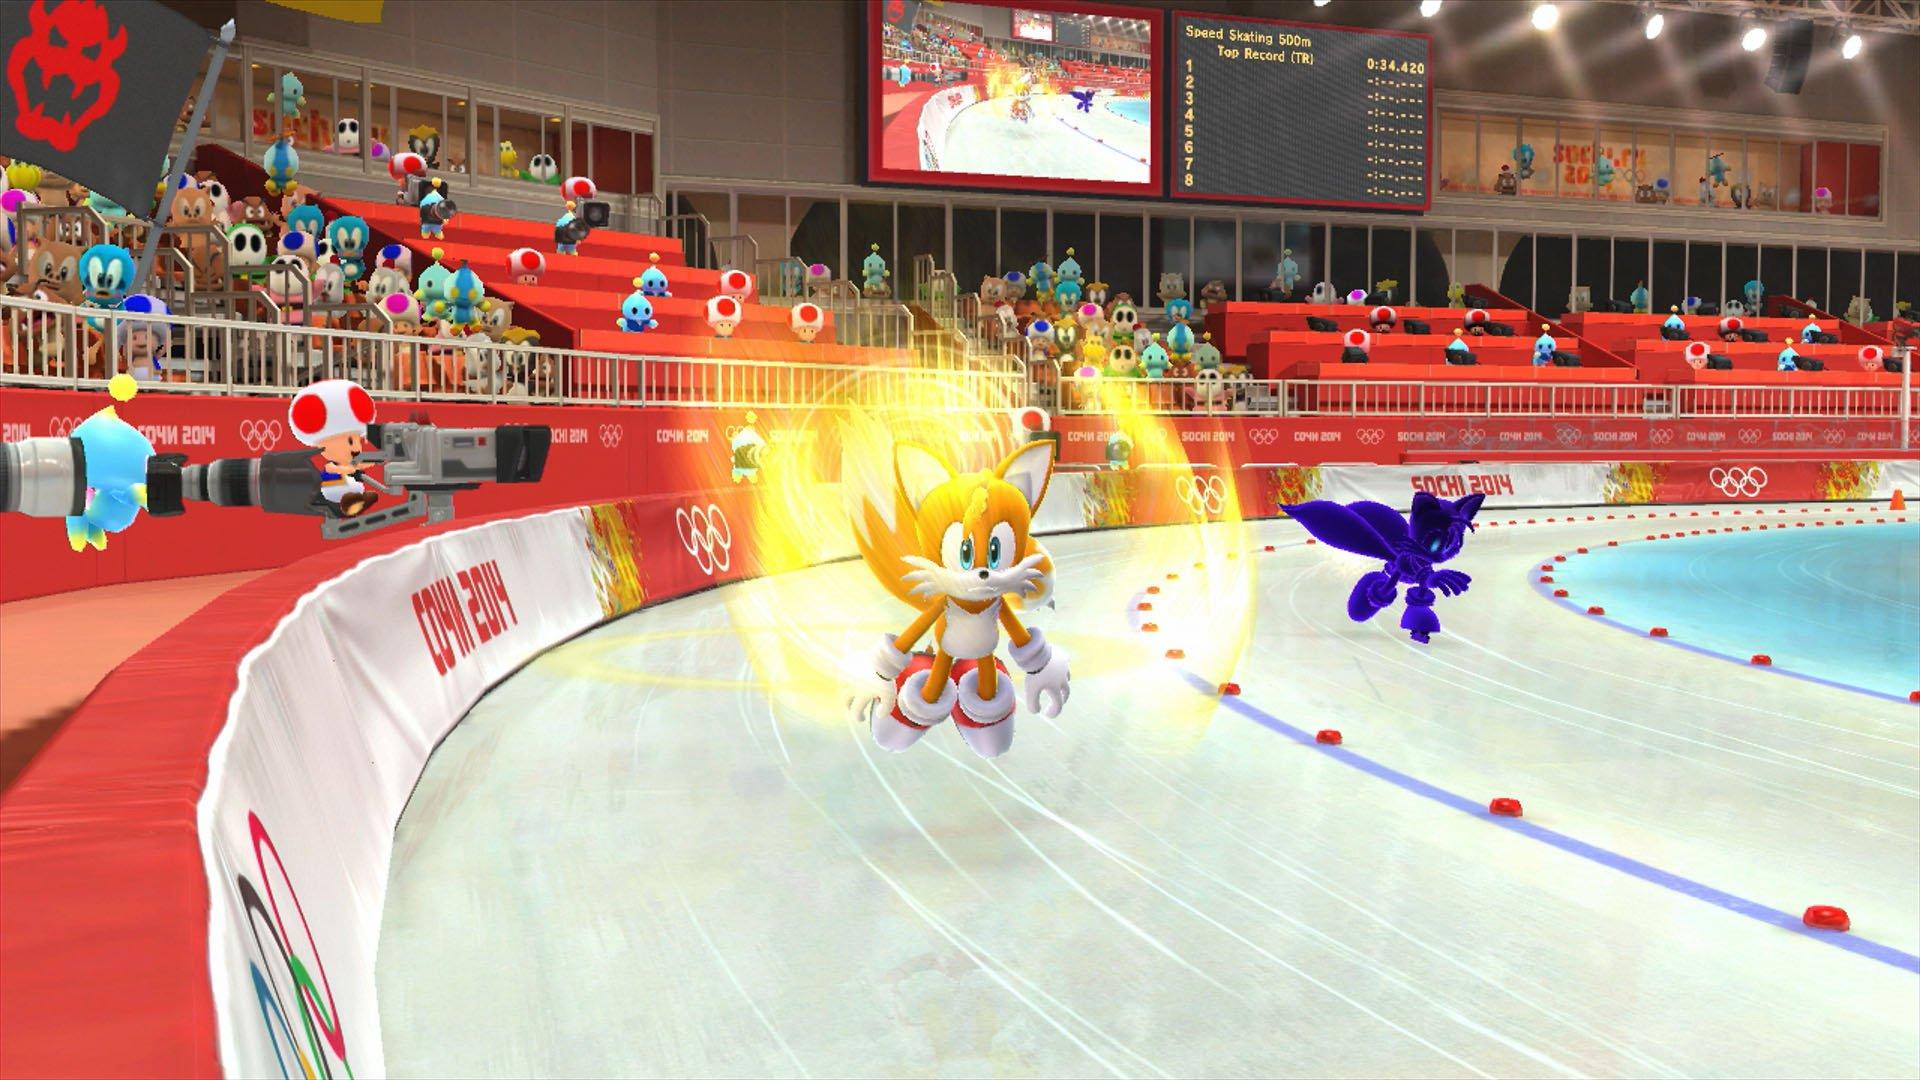 Mario & Sonic at the Sochi 2014 Olympic Winter Games - Meus Jogos